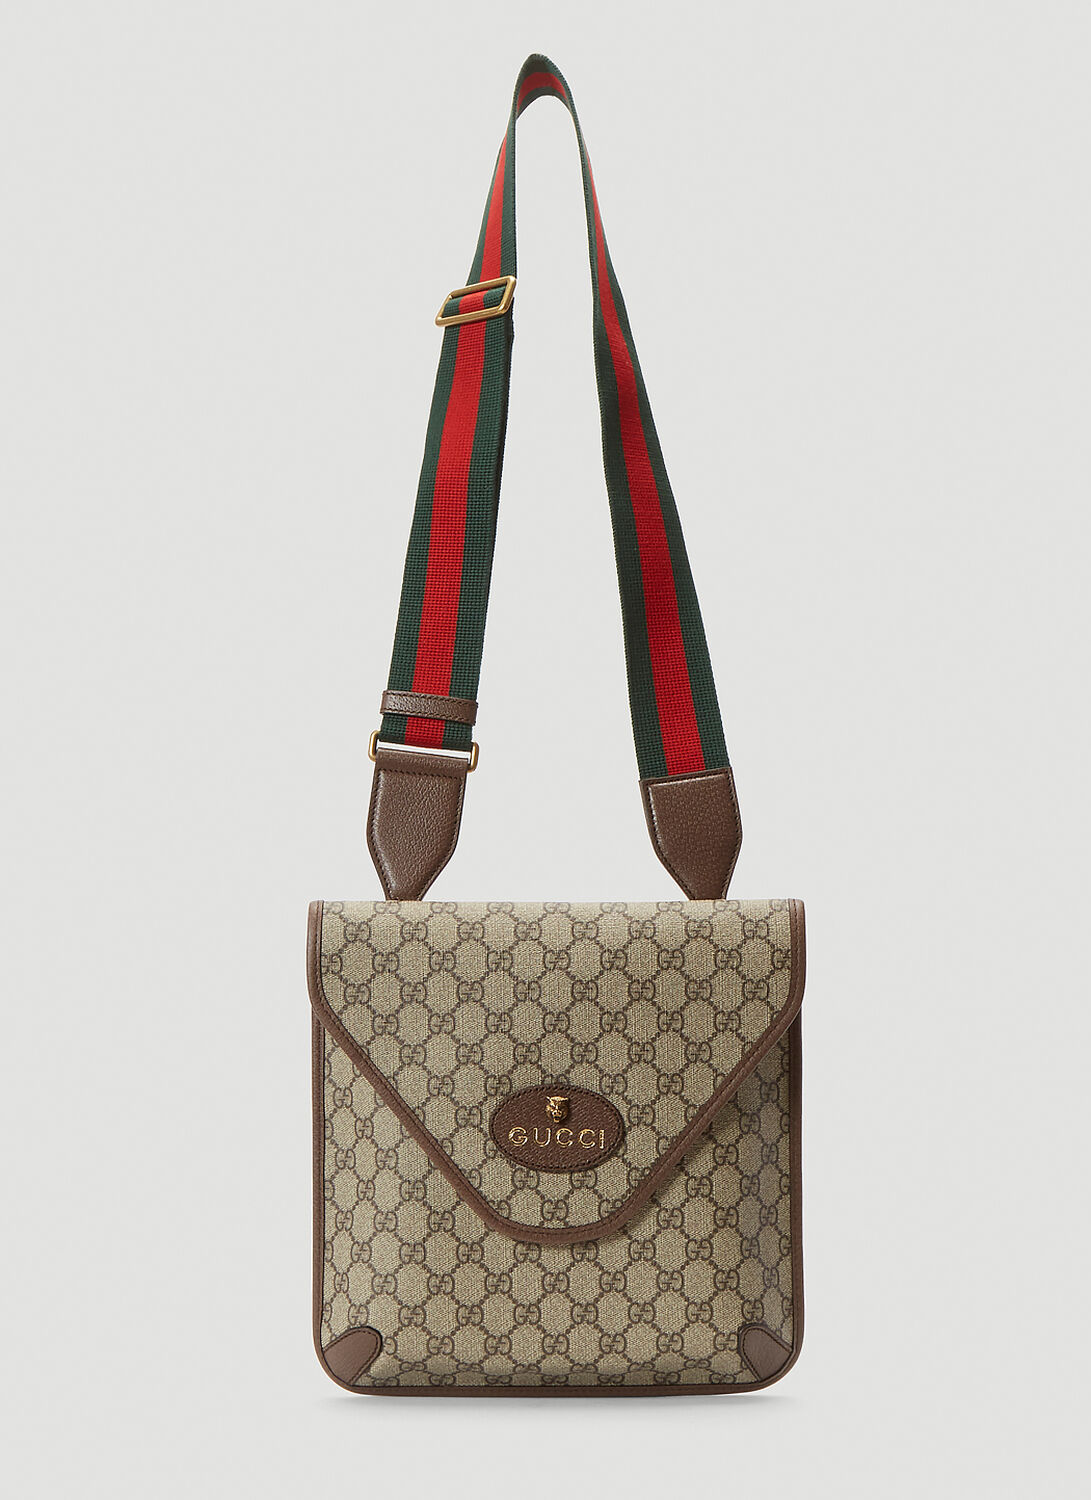 Neo Vintage Crossbody Bag in Brown - Gucci